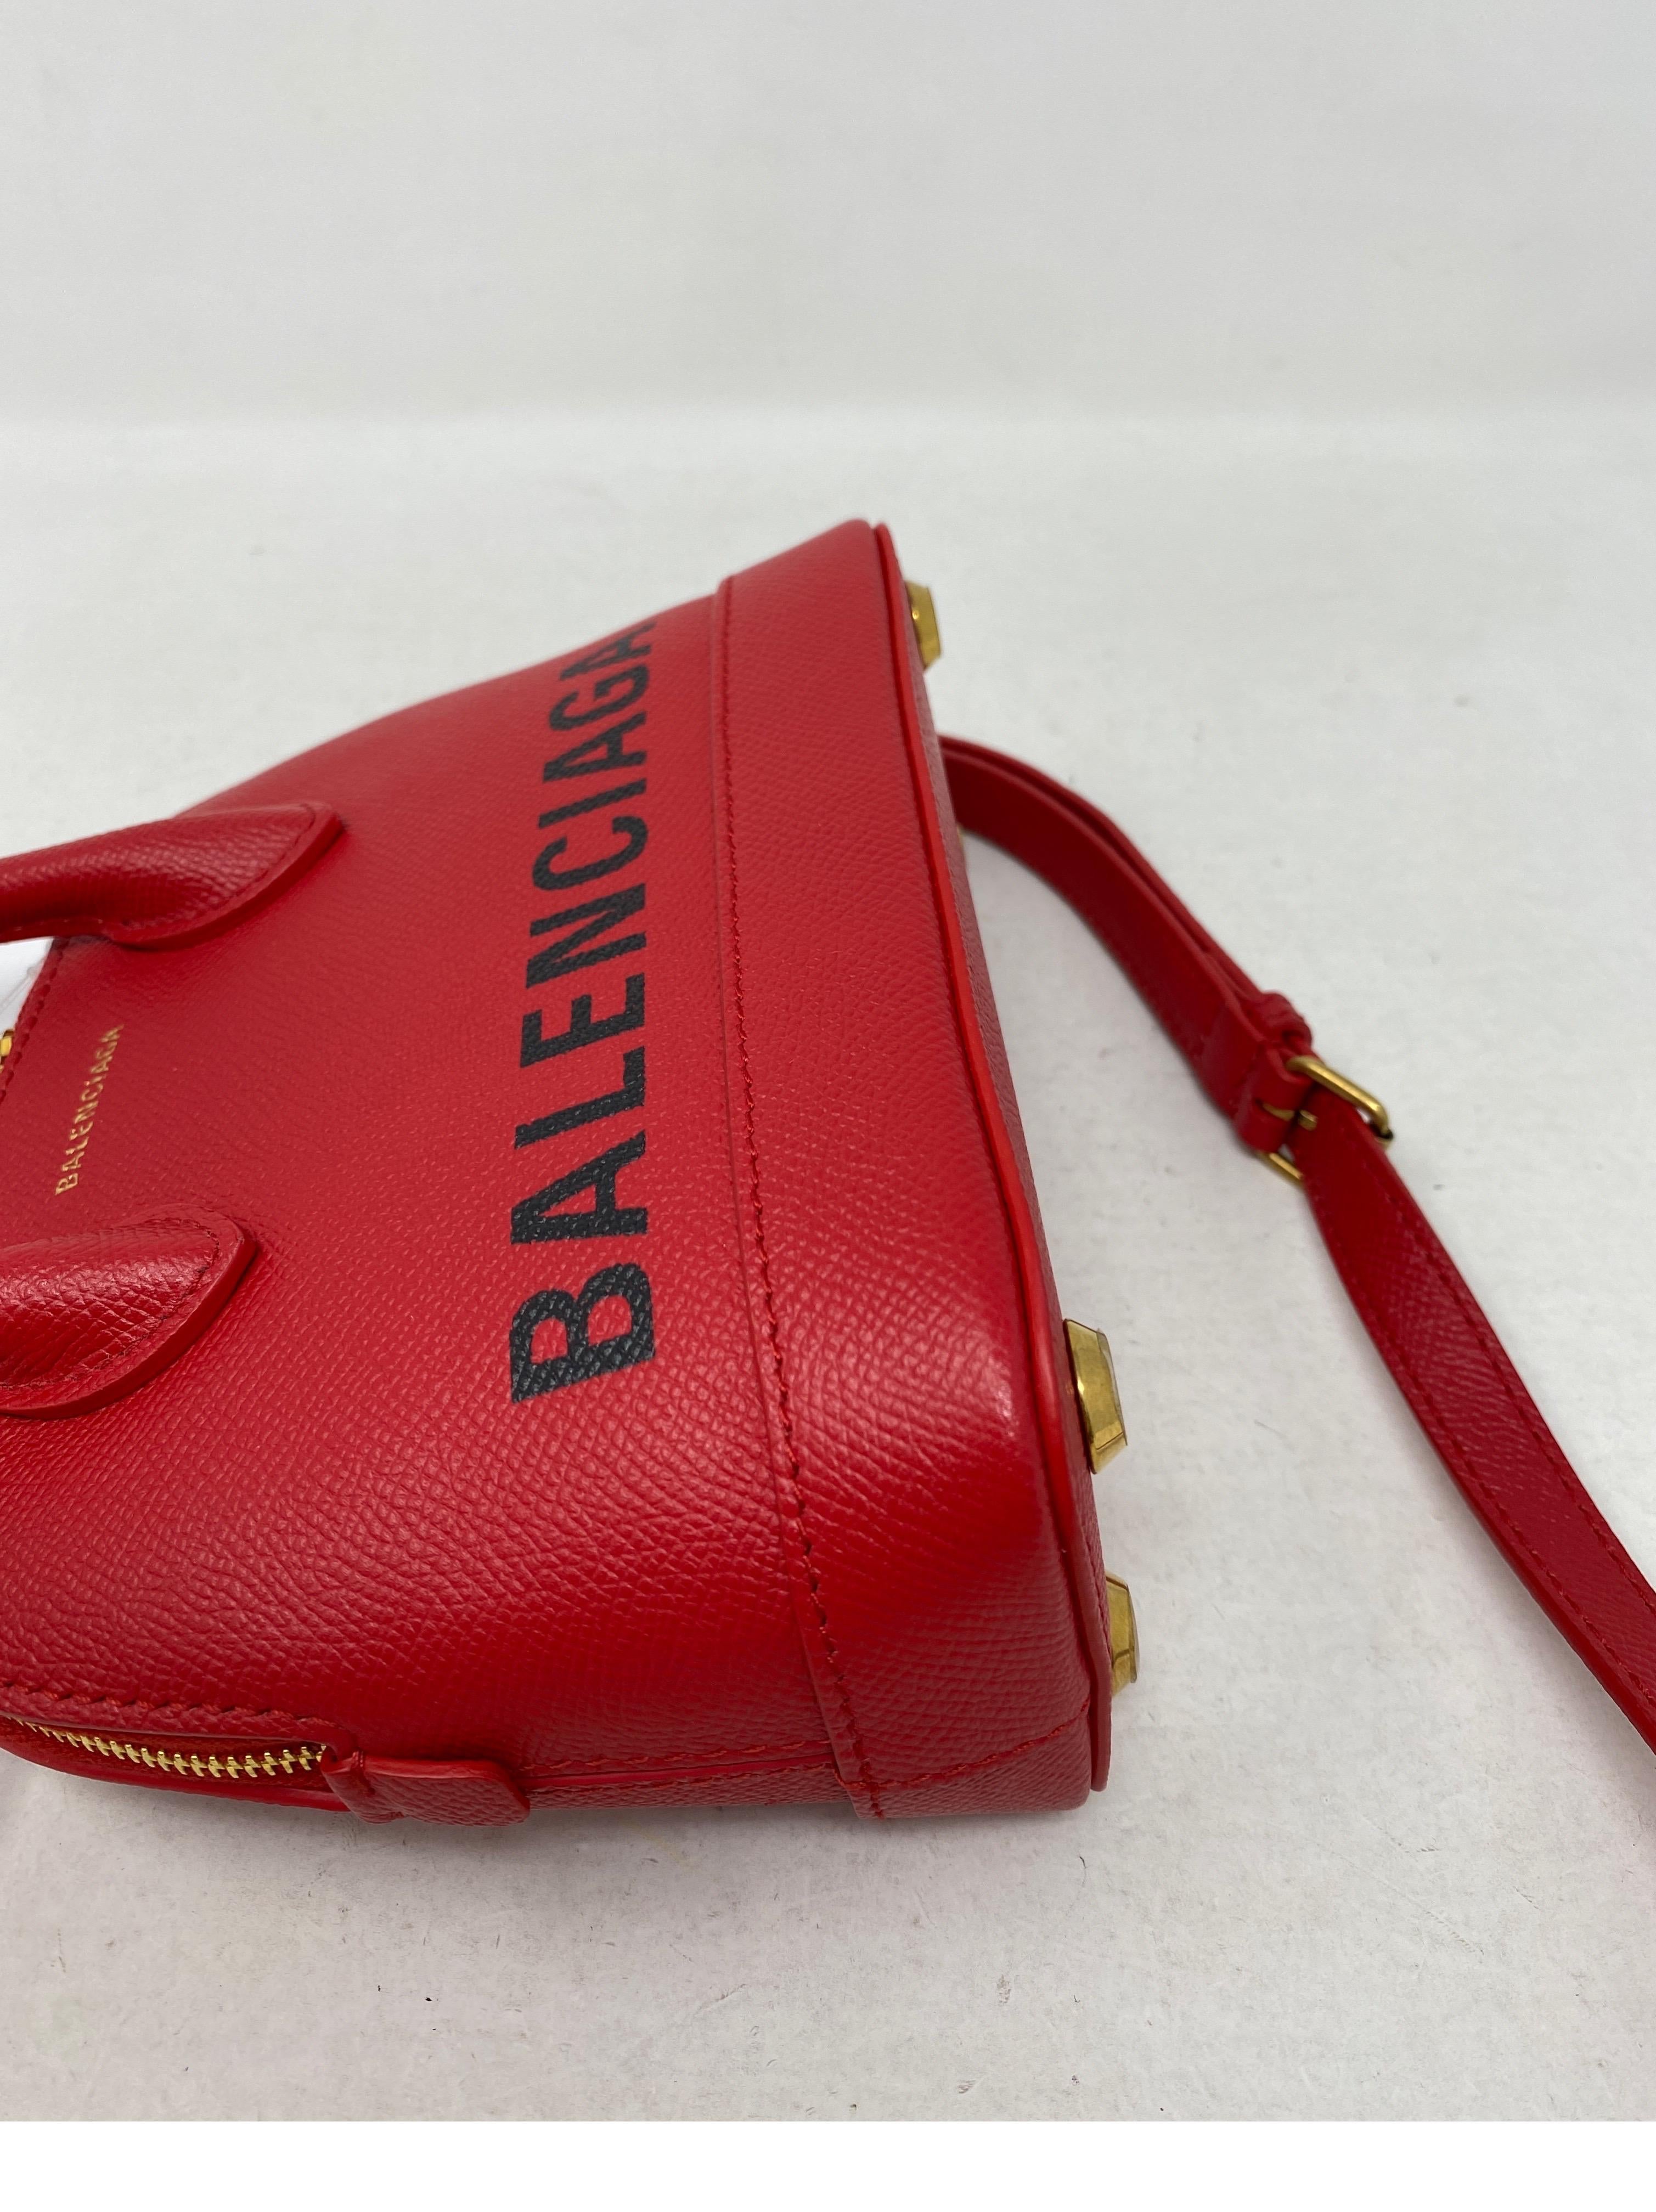 Women's or Men's Balenciaga Red Leather Mini Bag